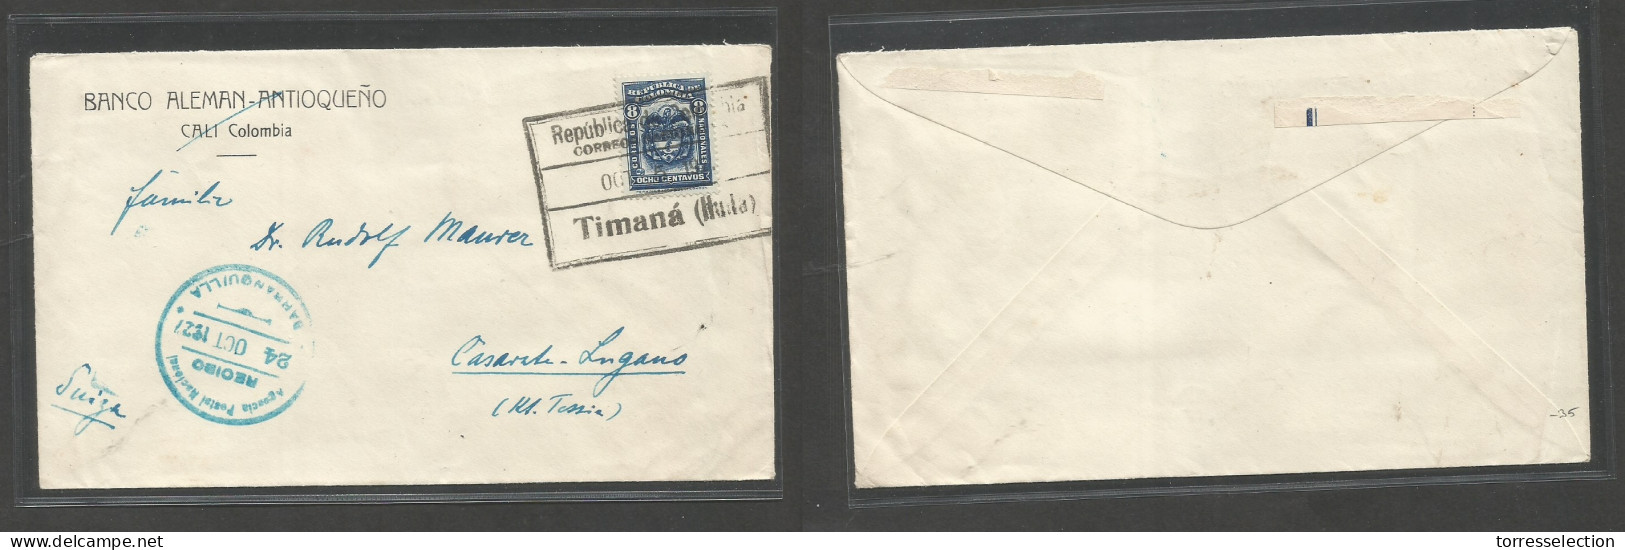 COLOMBIA. 1927 (5 Oct) Timana, Huda - Switzerland, Lugano Via Barranquilla. Fkd Comercial Envelope. Fine Town Usage. SAL - Colombia